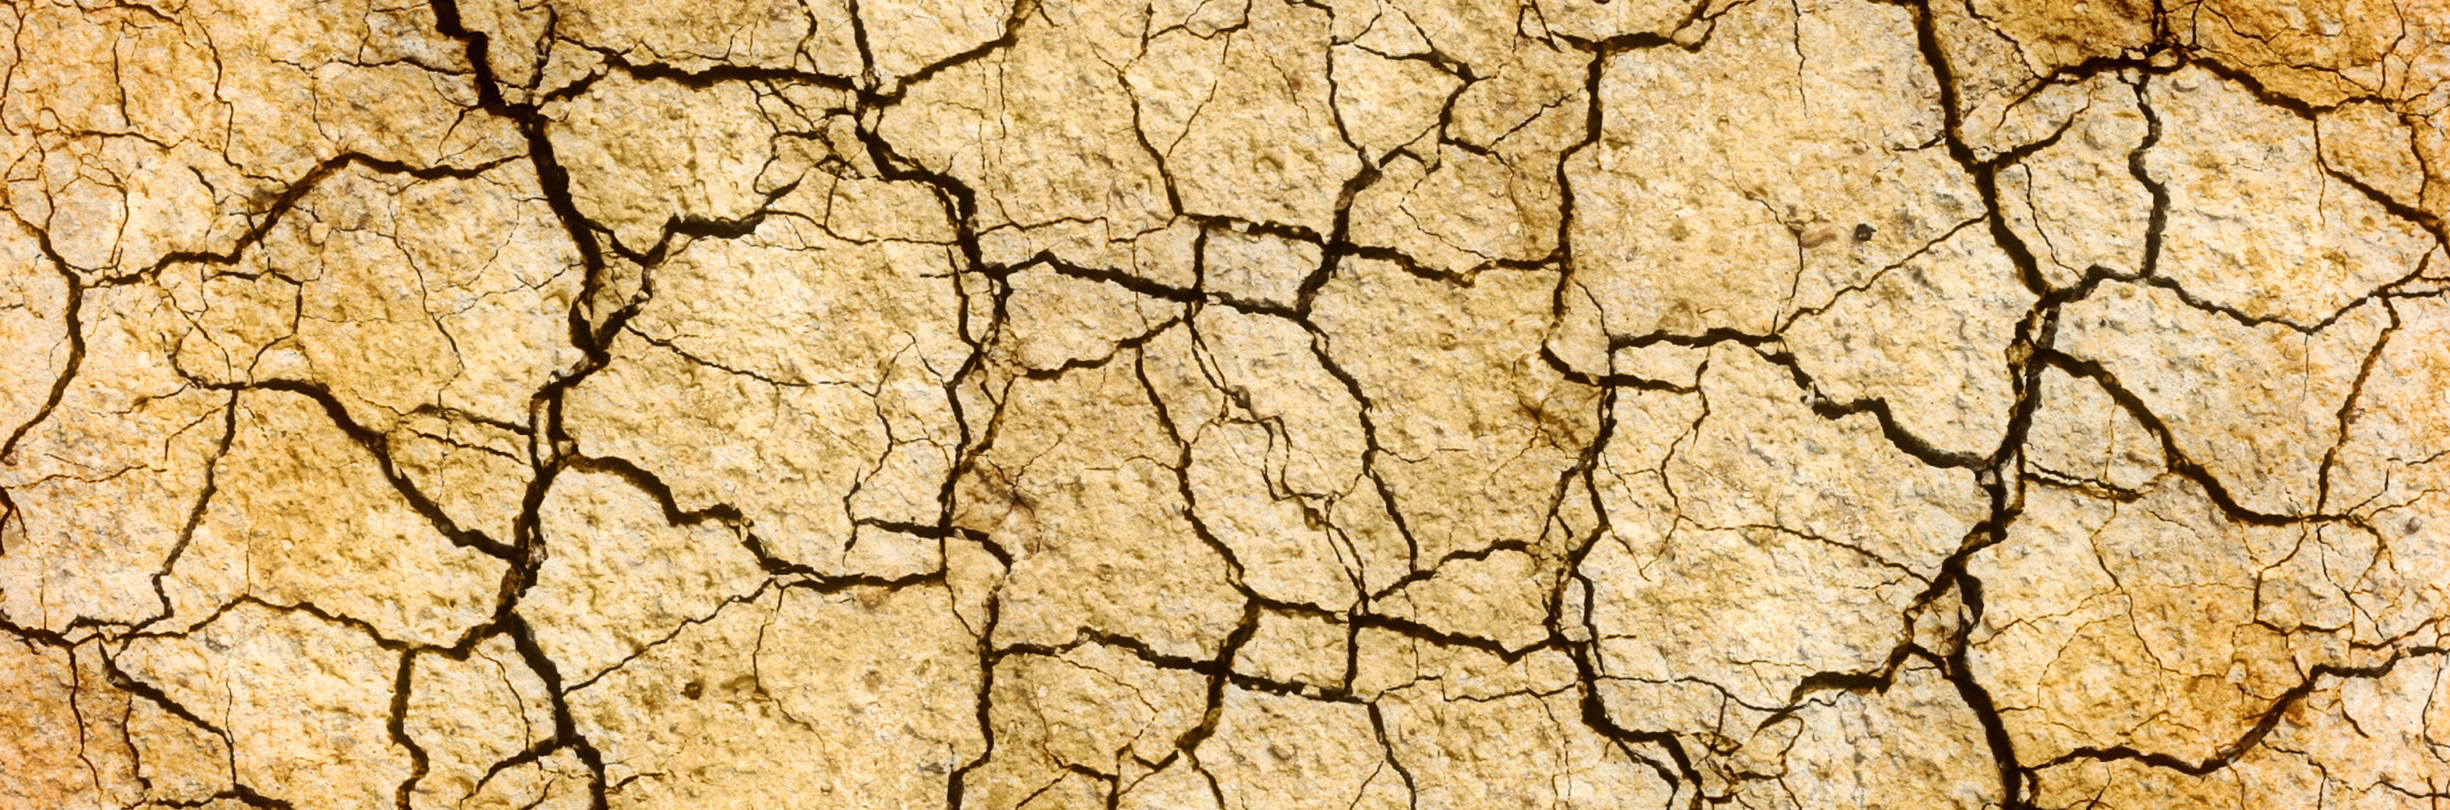 Cracked earth (https://pixabay.com/en/cracks-drought-earth-land-surface-656796/)